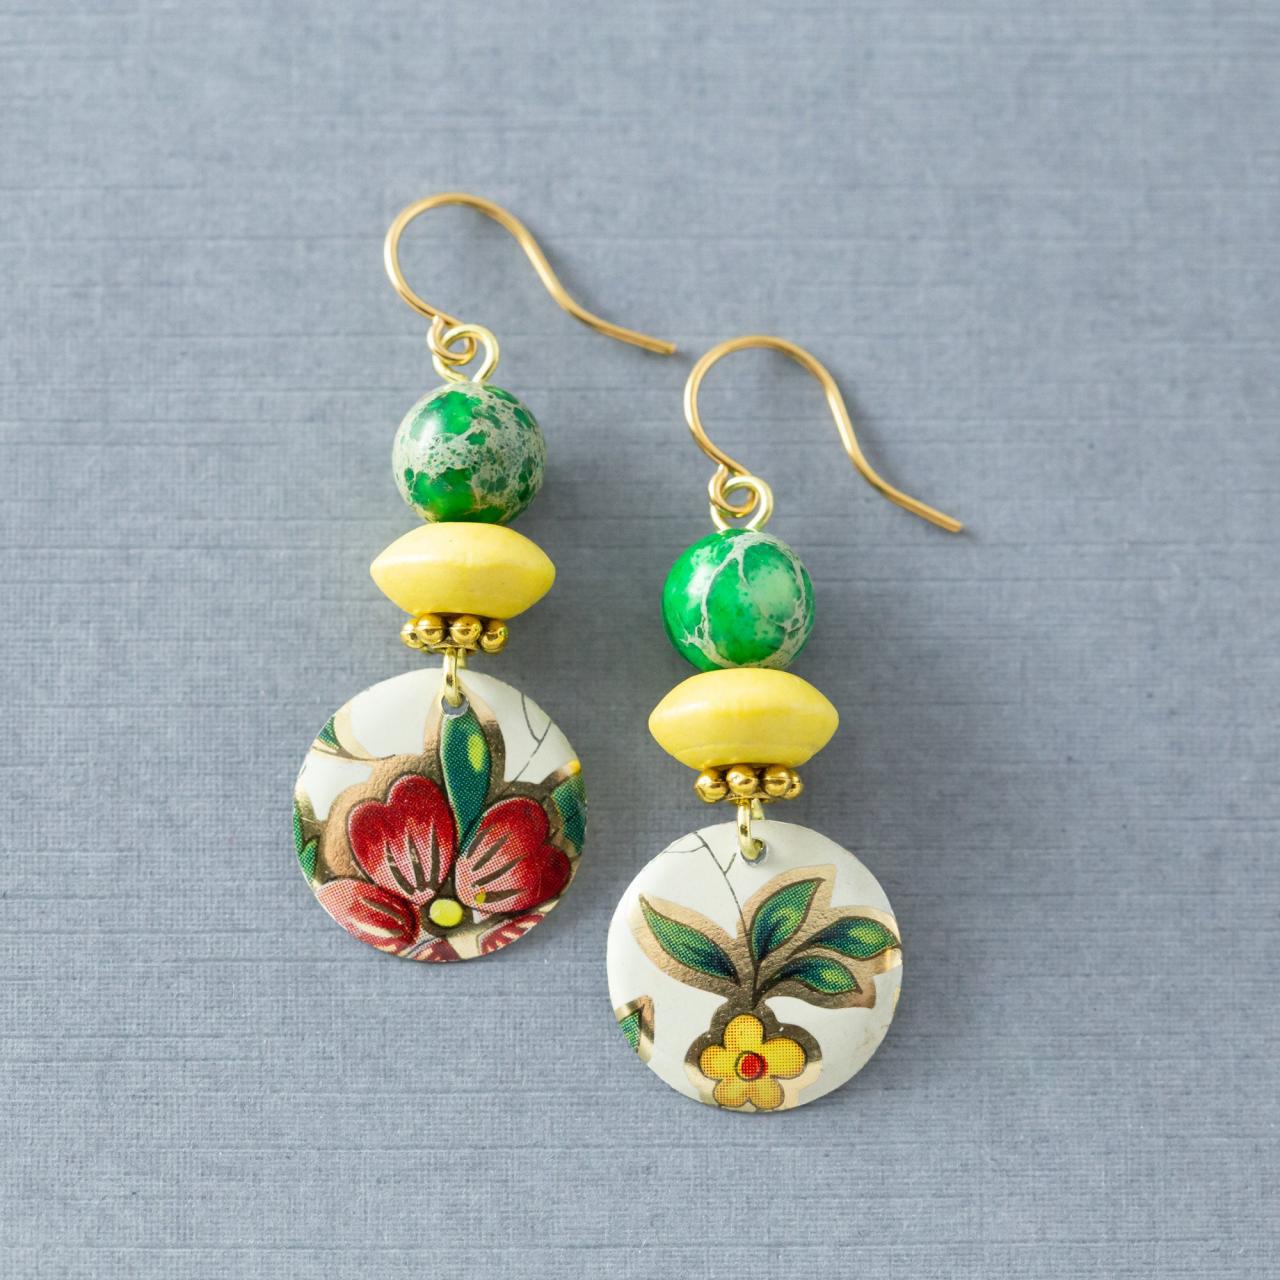 Boho Flower Earrings, Tin Earrings, Dangle Earrings, Green And Yellow Earrings, Tin Jewelry, Bohemian Jewelry